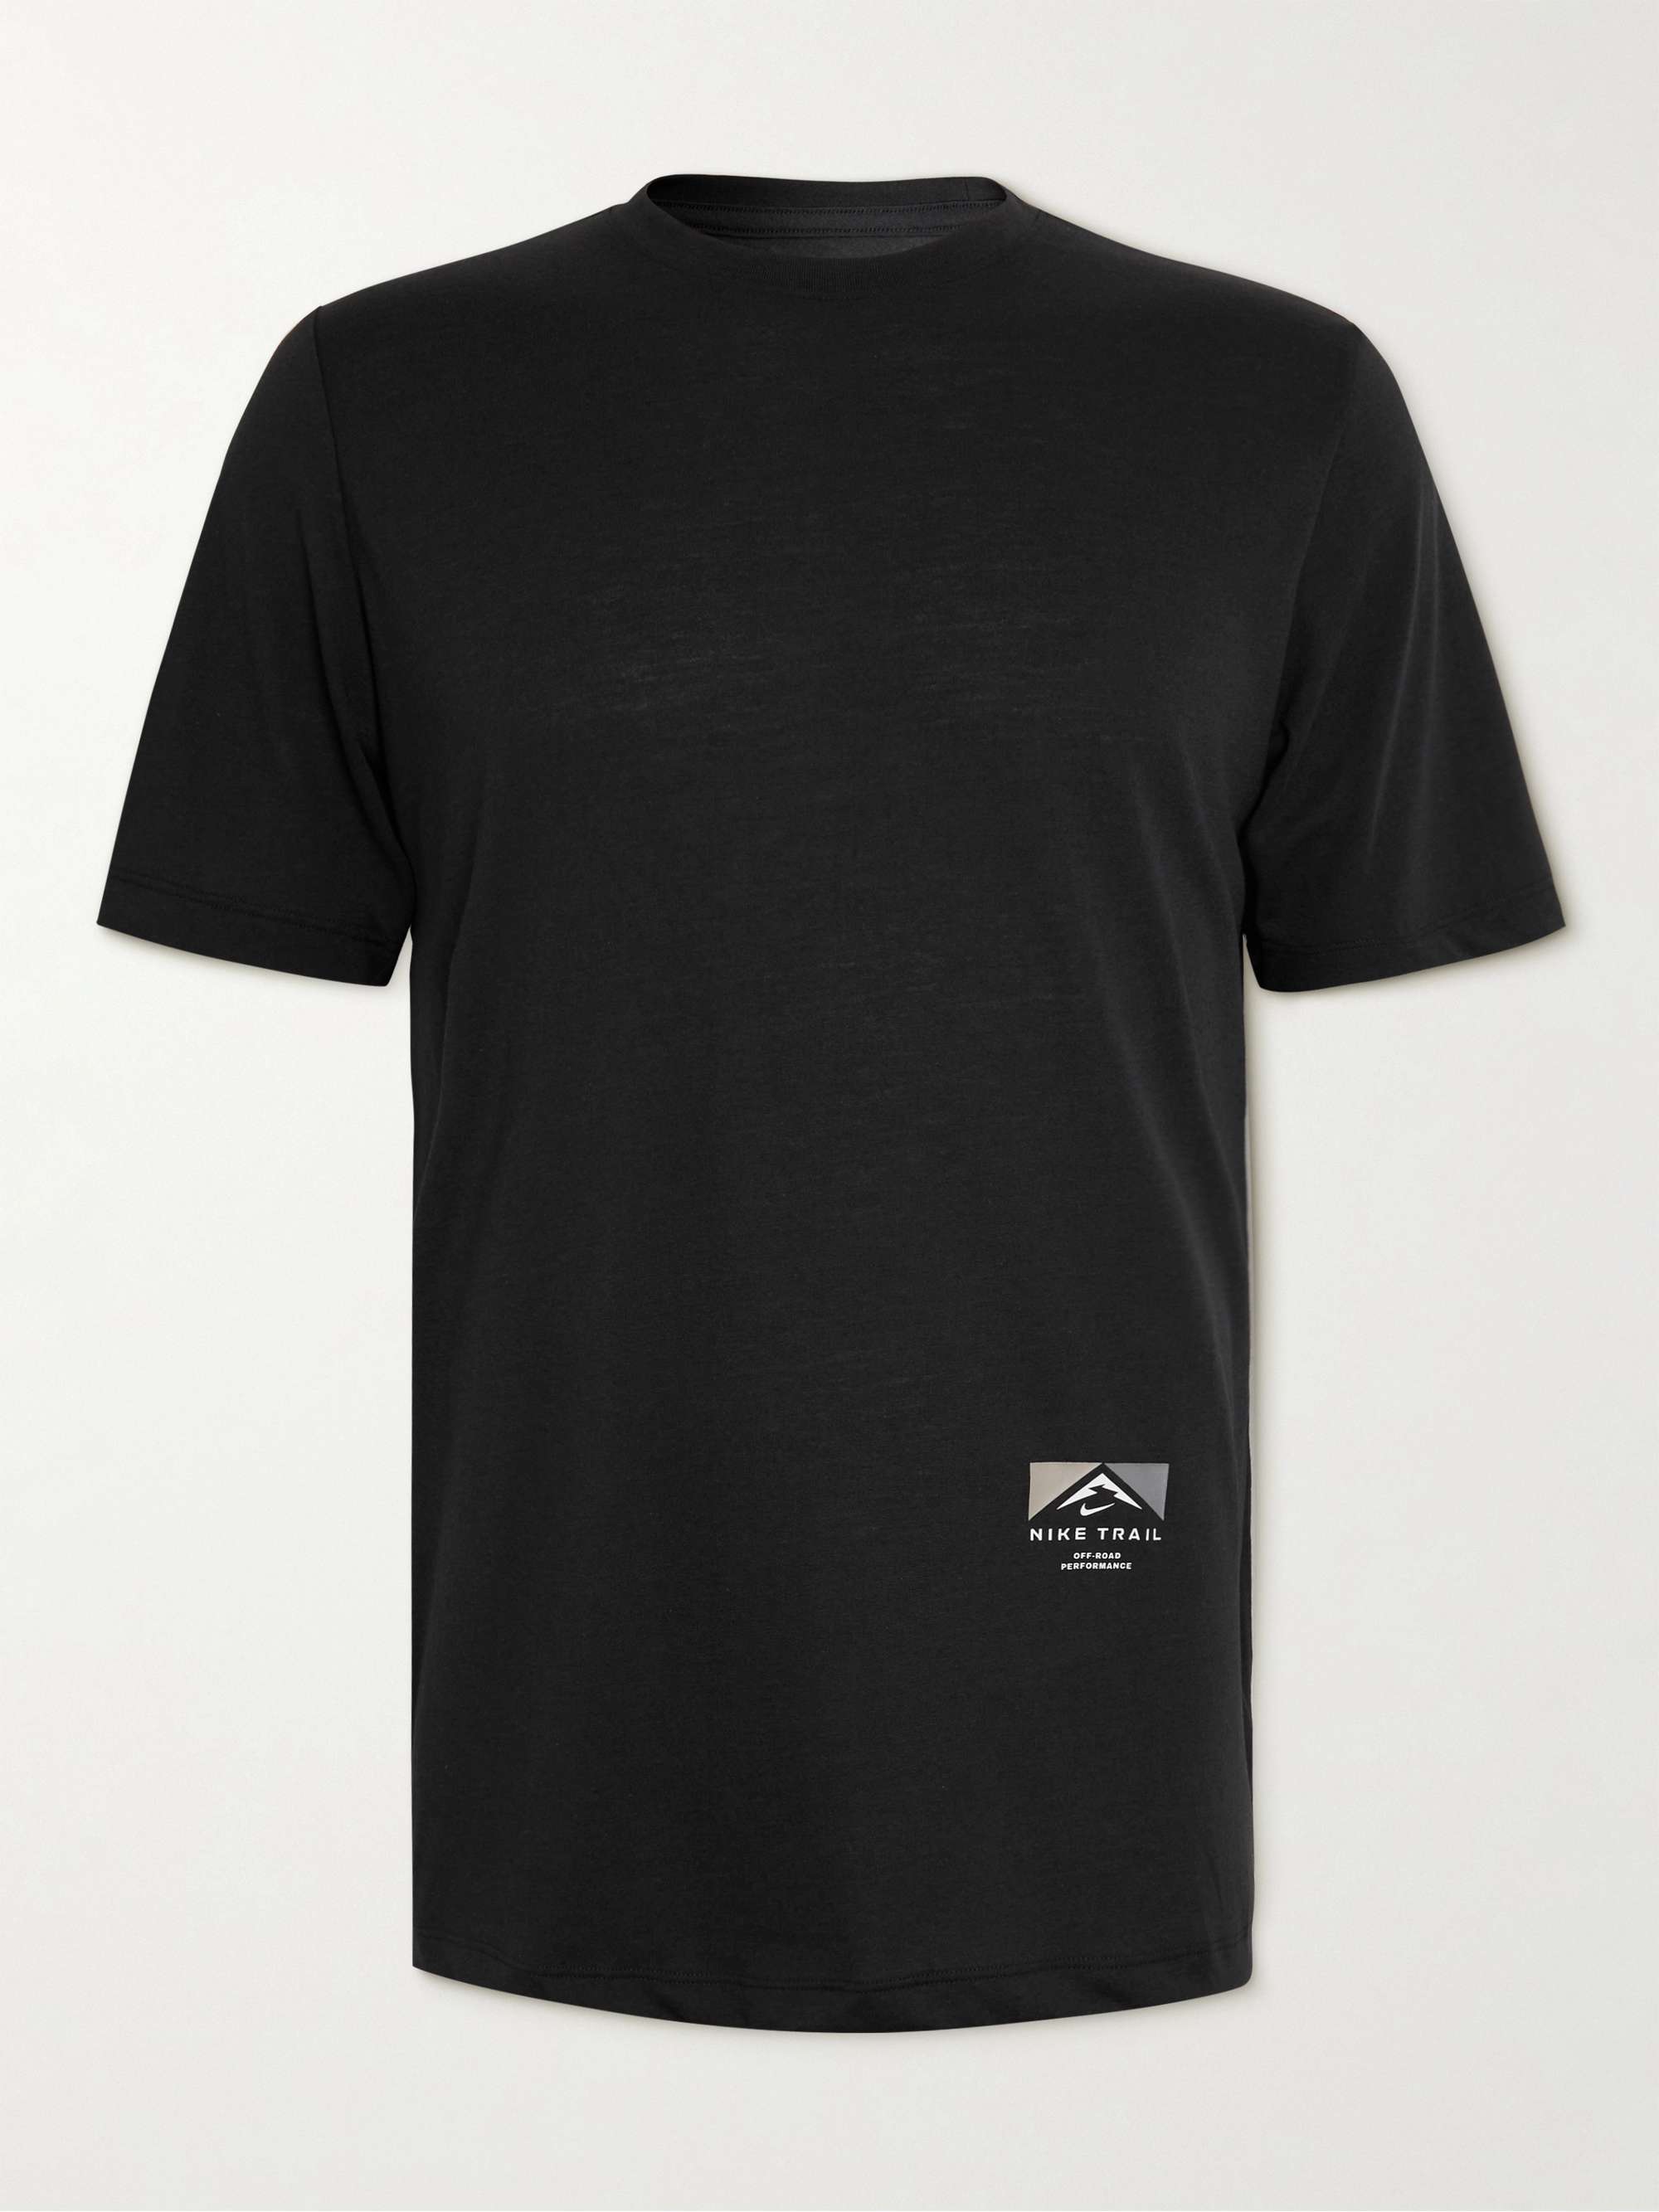 NIKE RUNNING Trail Printed Dri-FIT T-Shirt